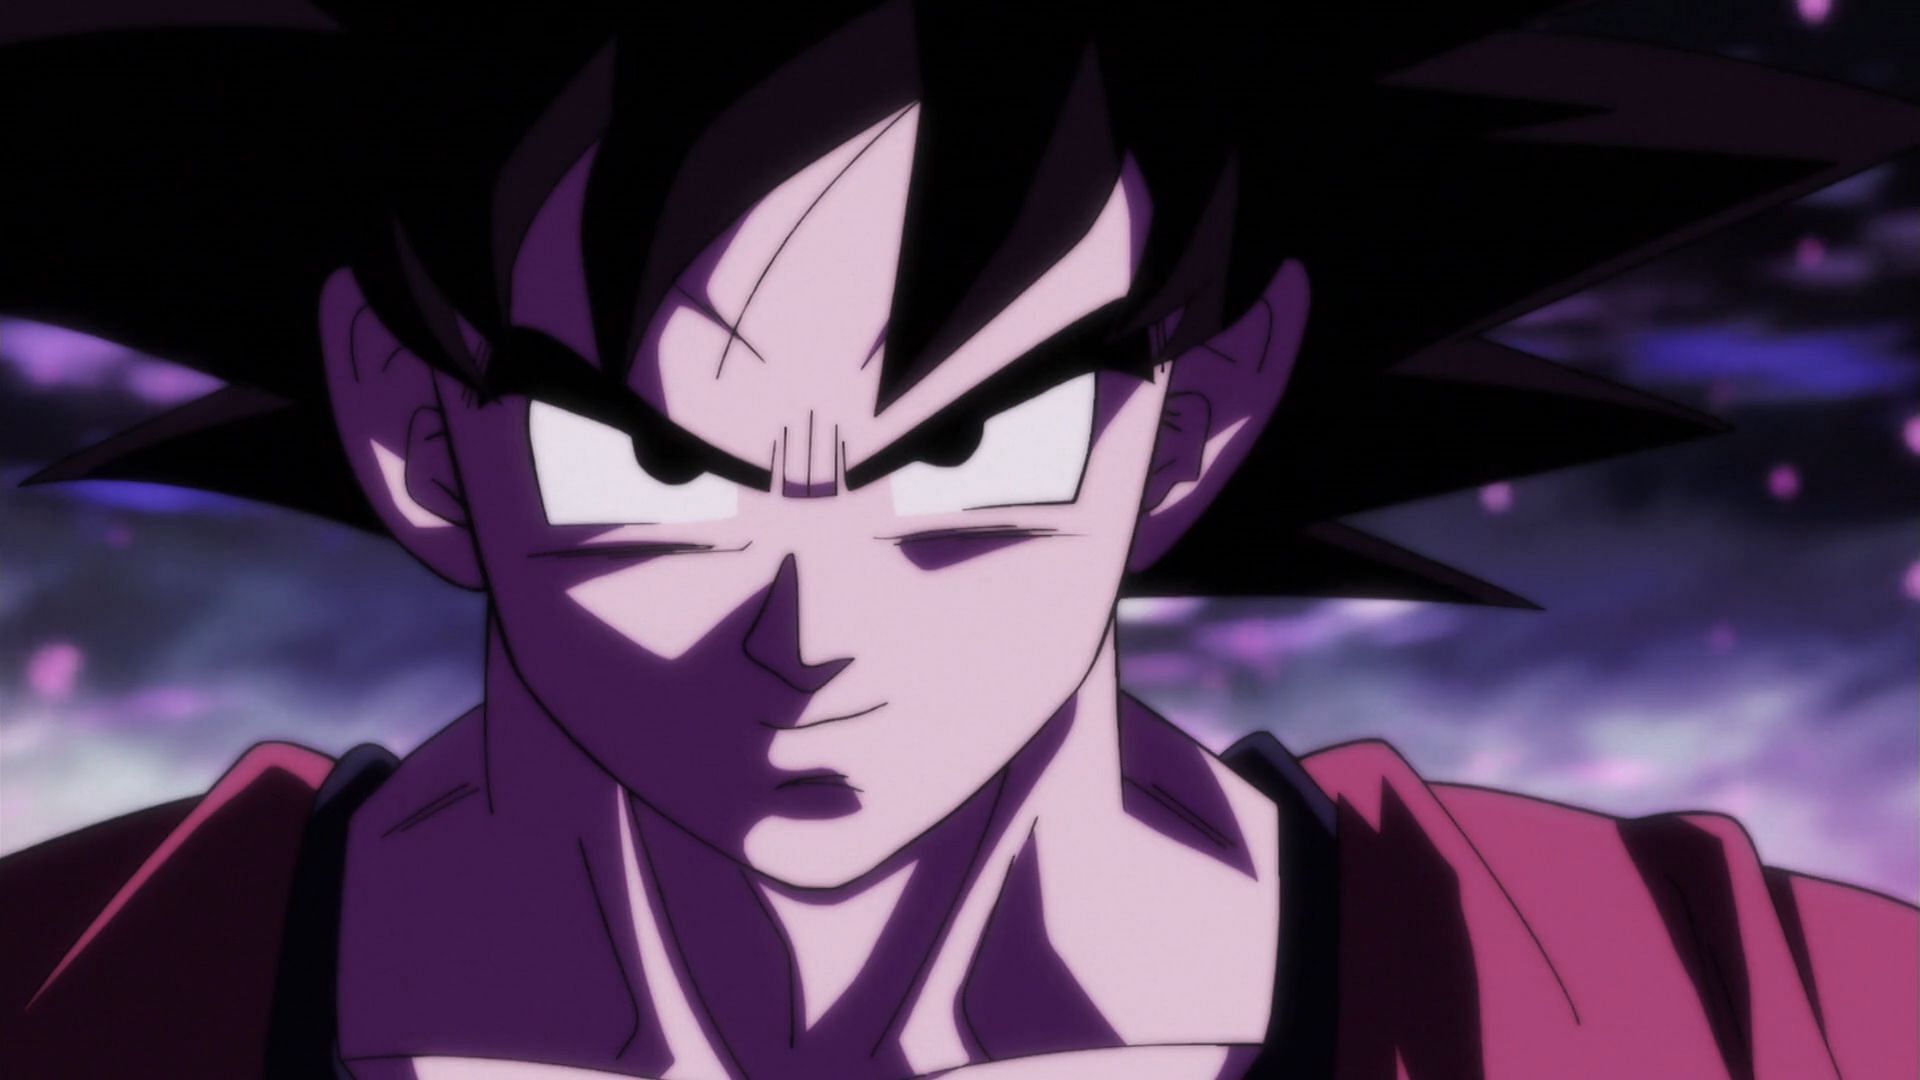 Goku as seen in the anime series (Image via Toei Animation)